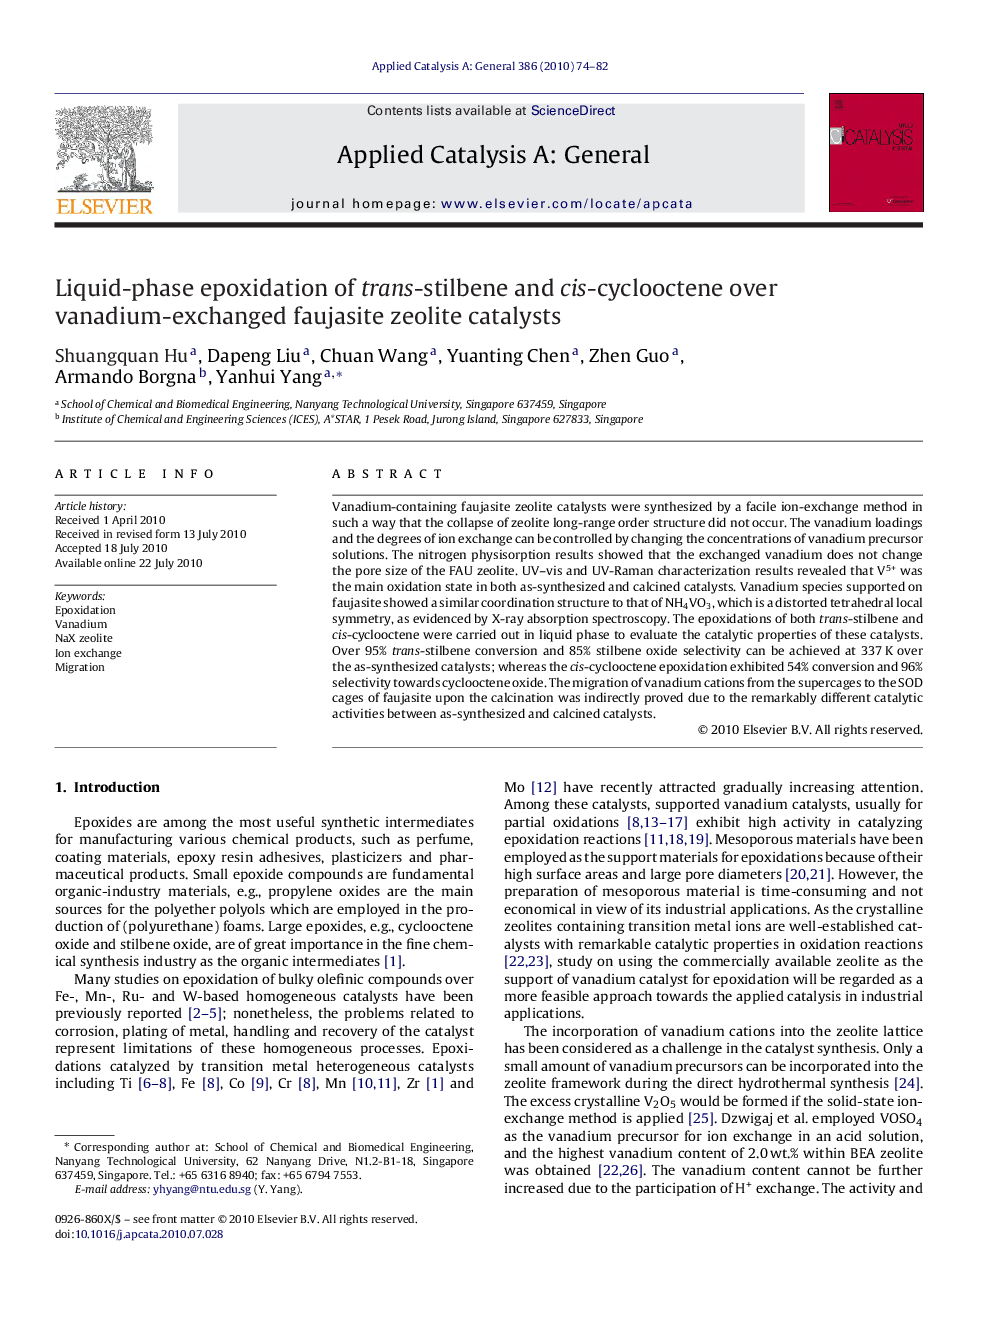 Liquid-phase epoxidation of trans-stilbene and cis-cyclooctene over vanadium-exchanged faujasite zeolite catalysts